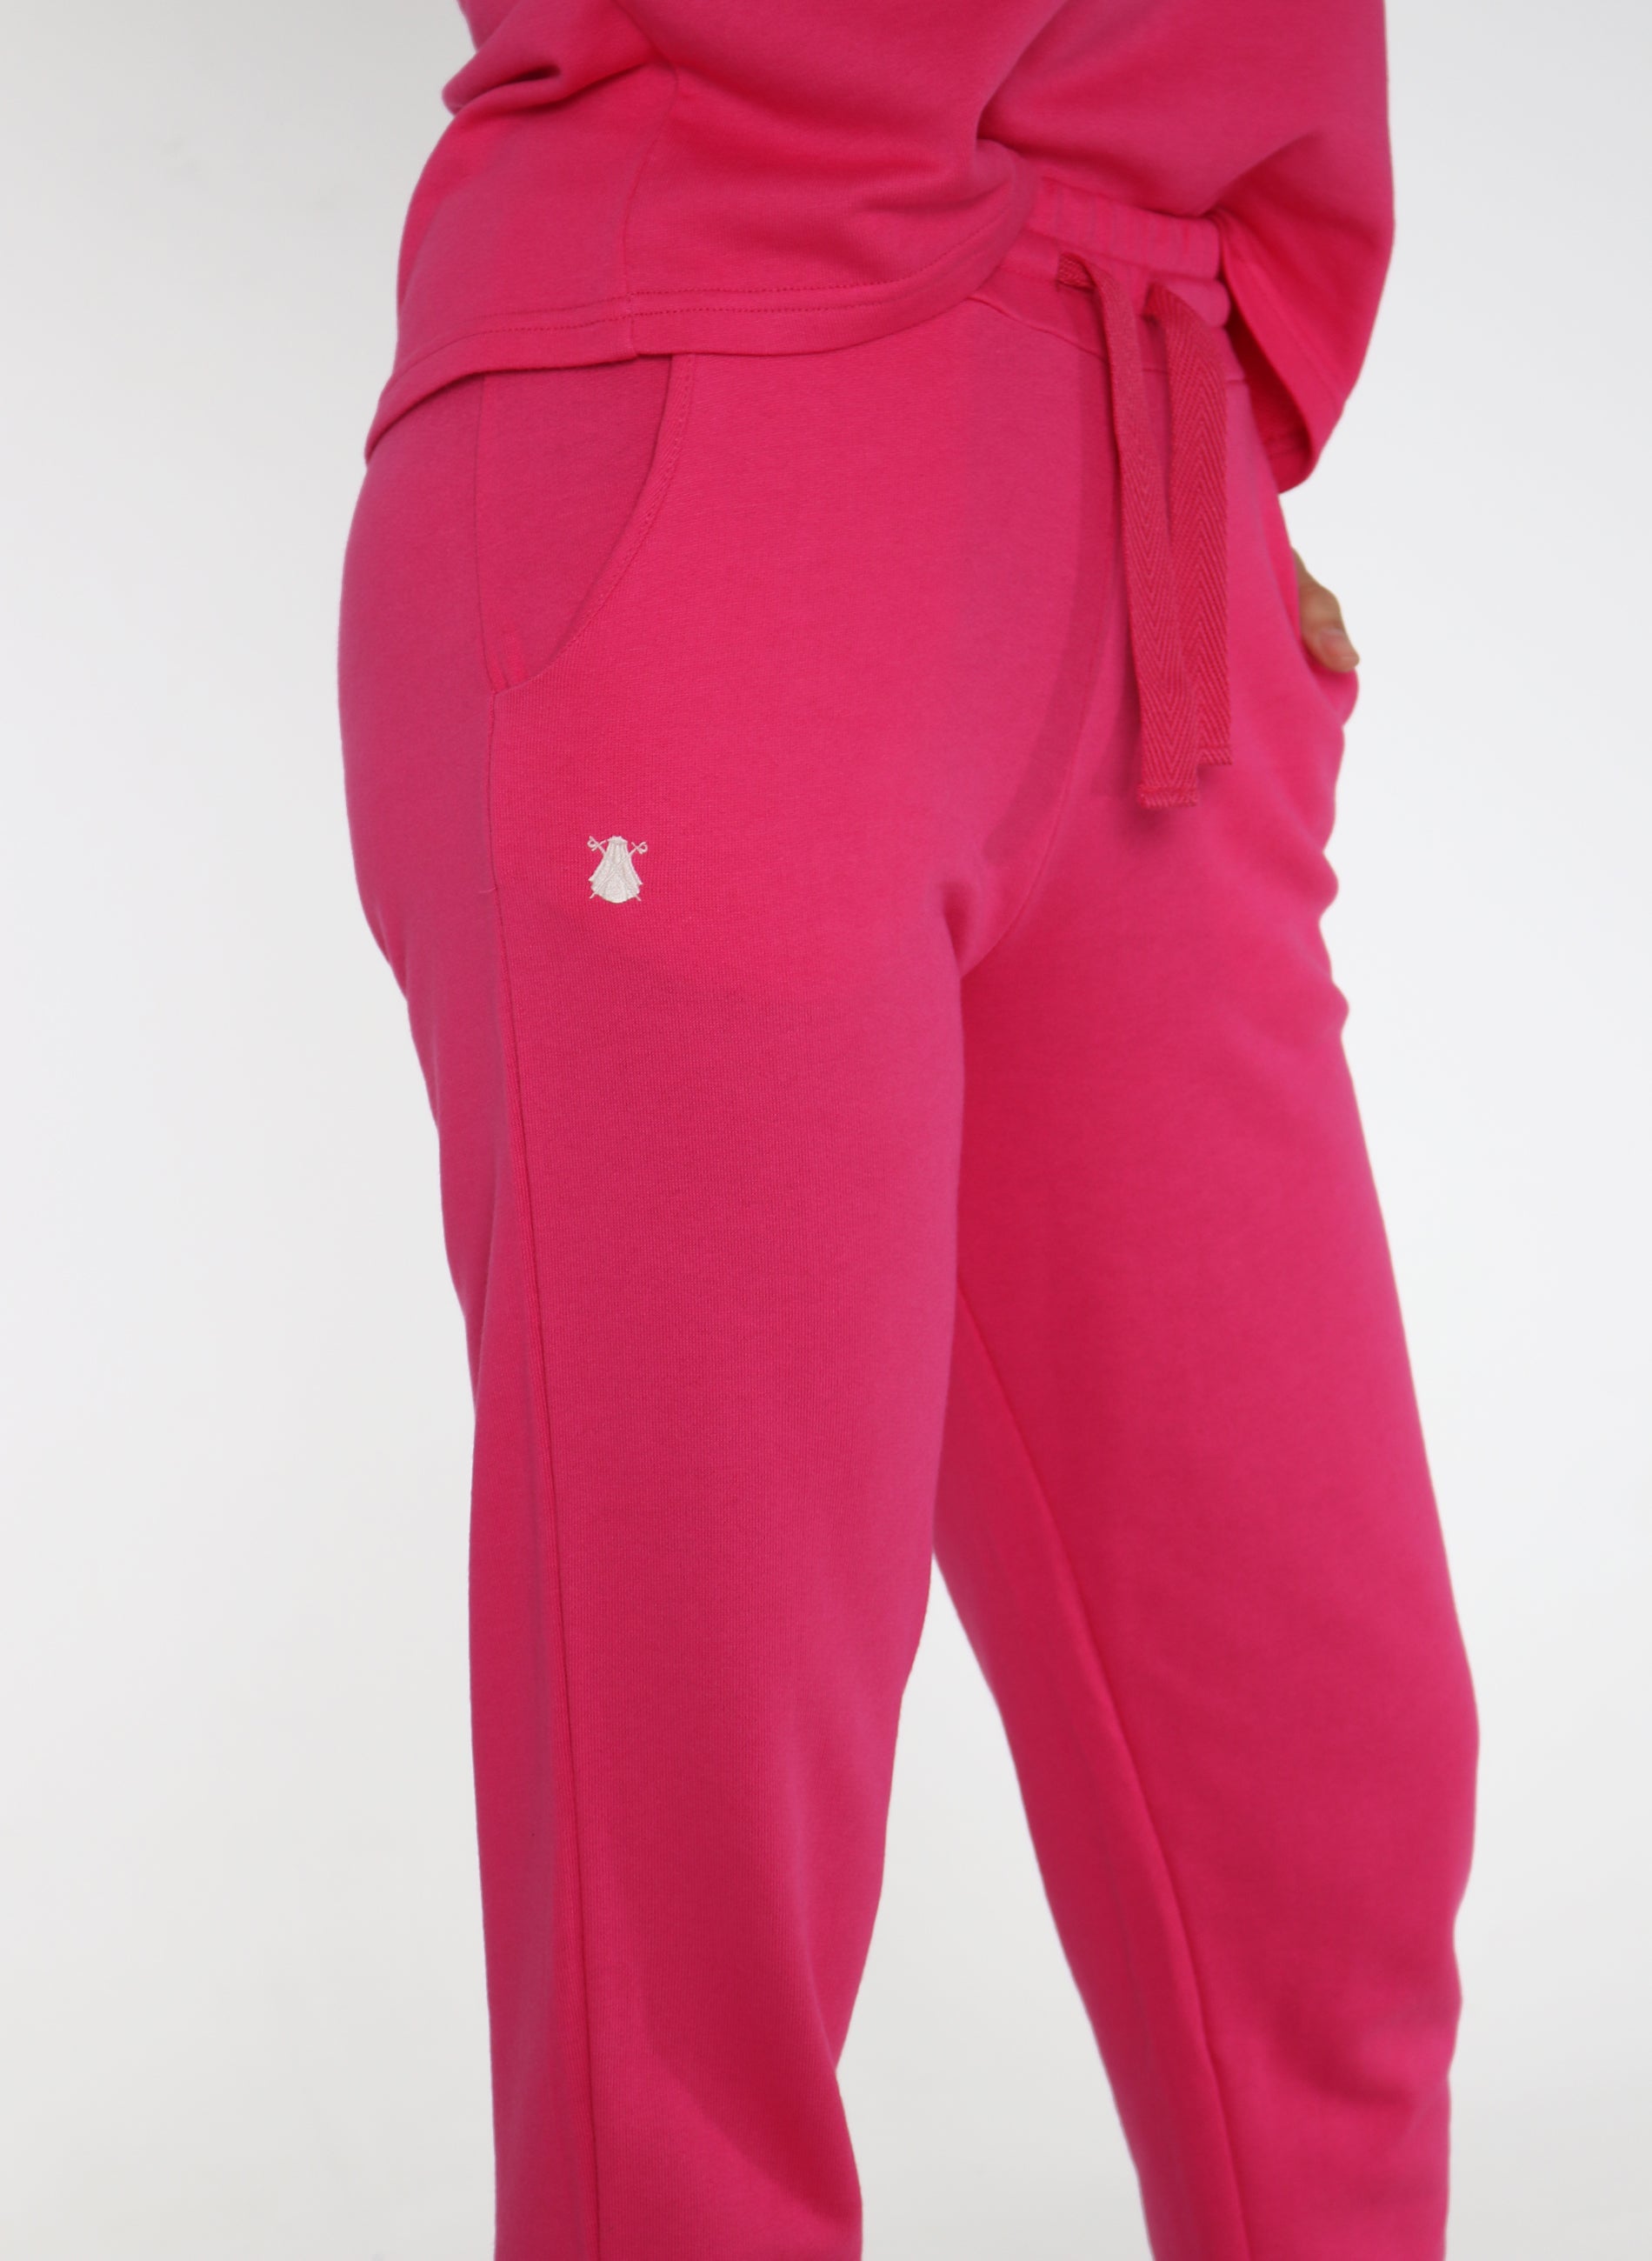 Weiche, rosafarbene Capote-Hose für Damen